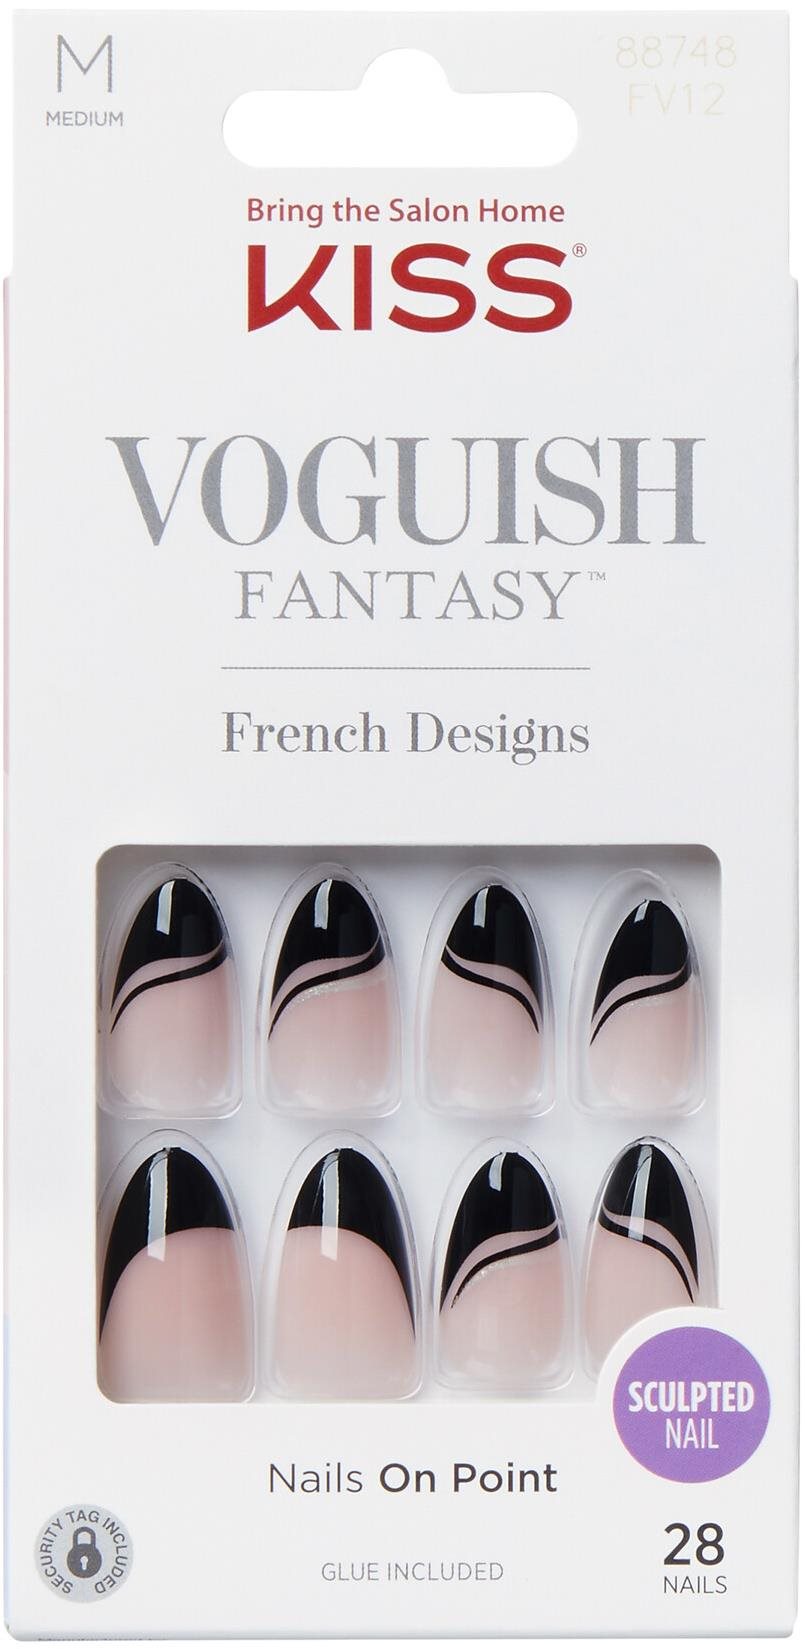 KISS Voguish Fantasy French - Magnifique